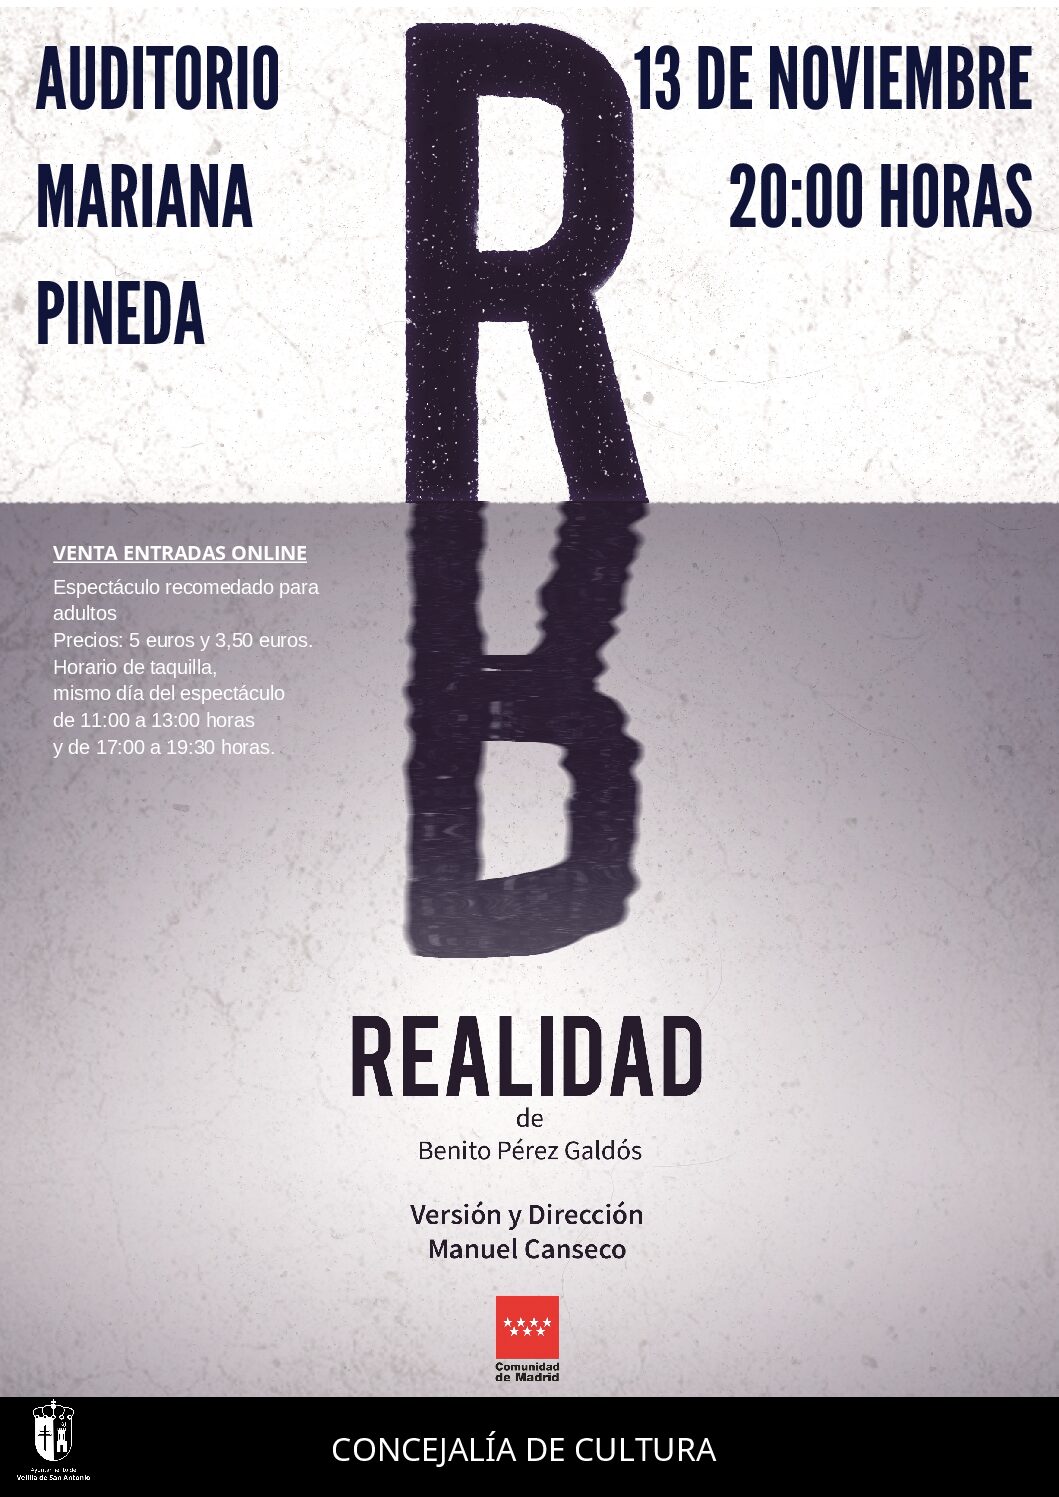 "Realidad" de Benito Pérez Galdós